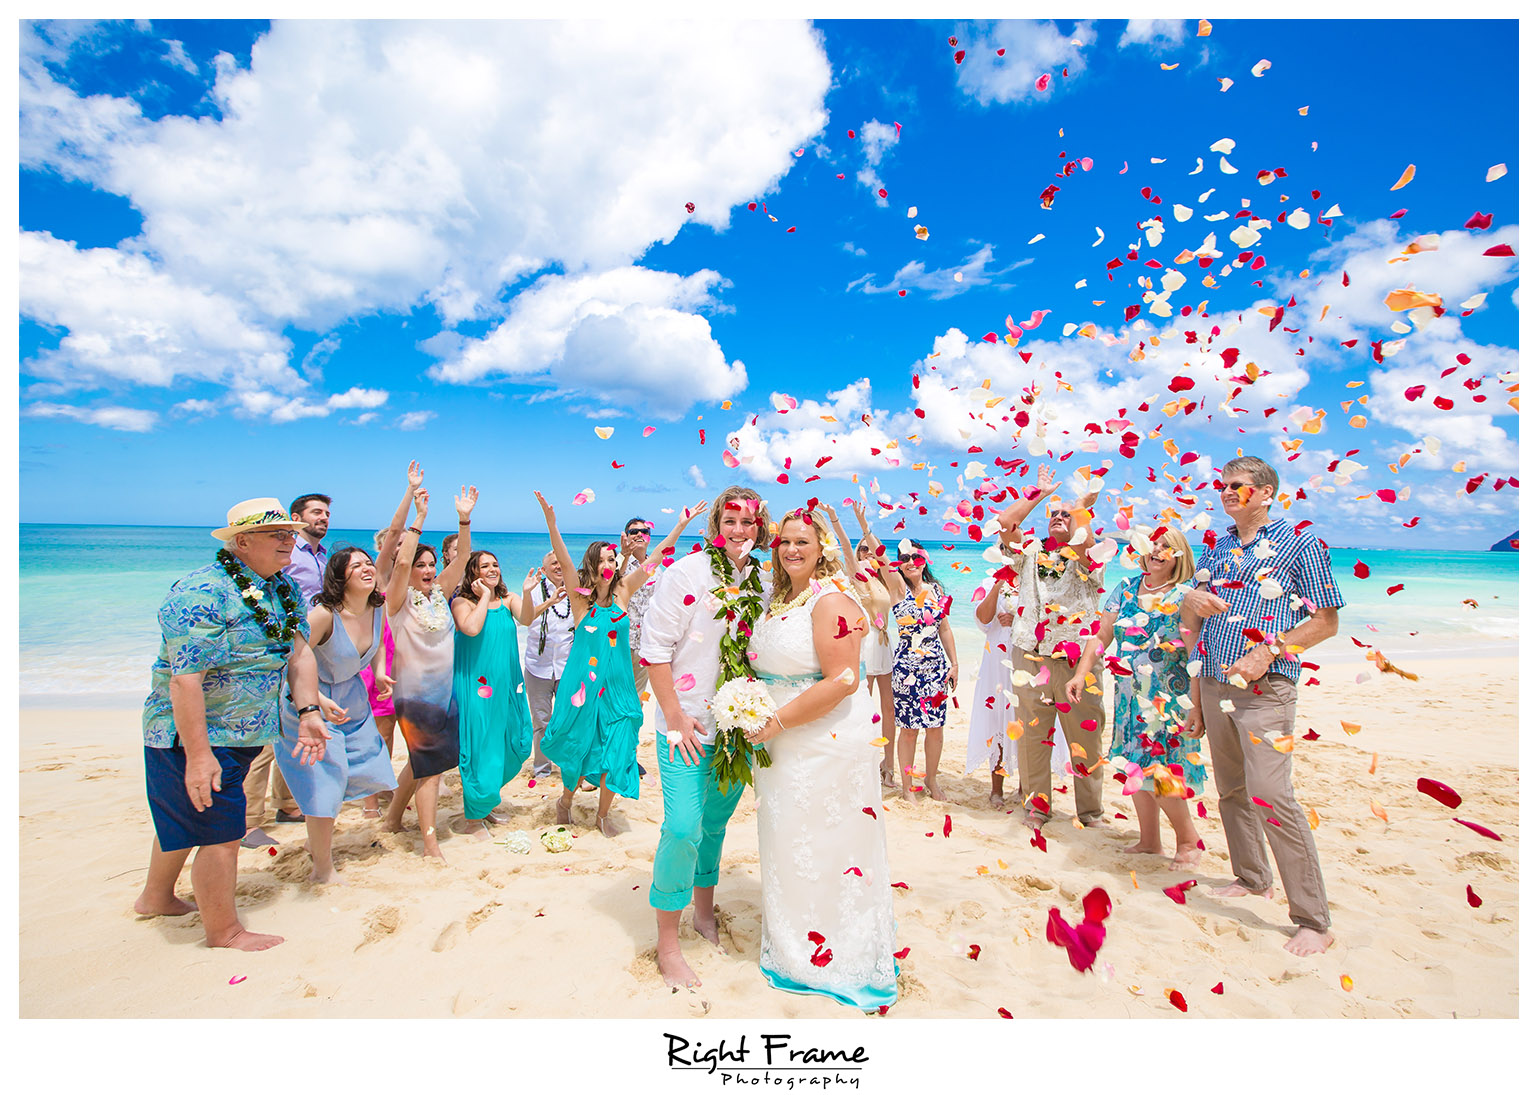 Hawaii Beach Wedding At Hale Pohaku Waimanalo By Right Frame Photography